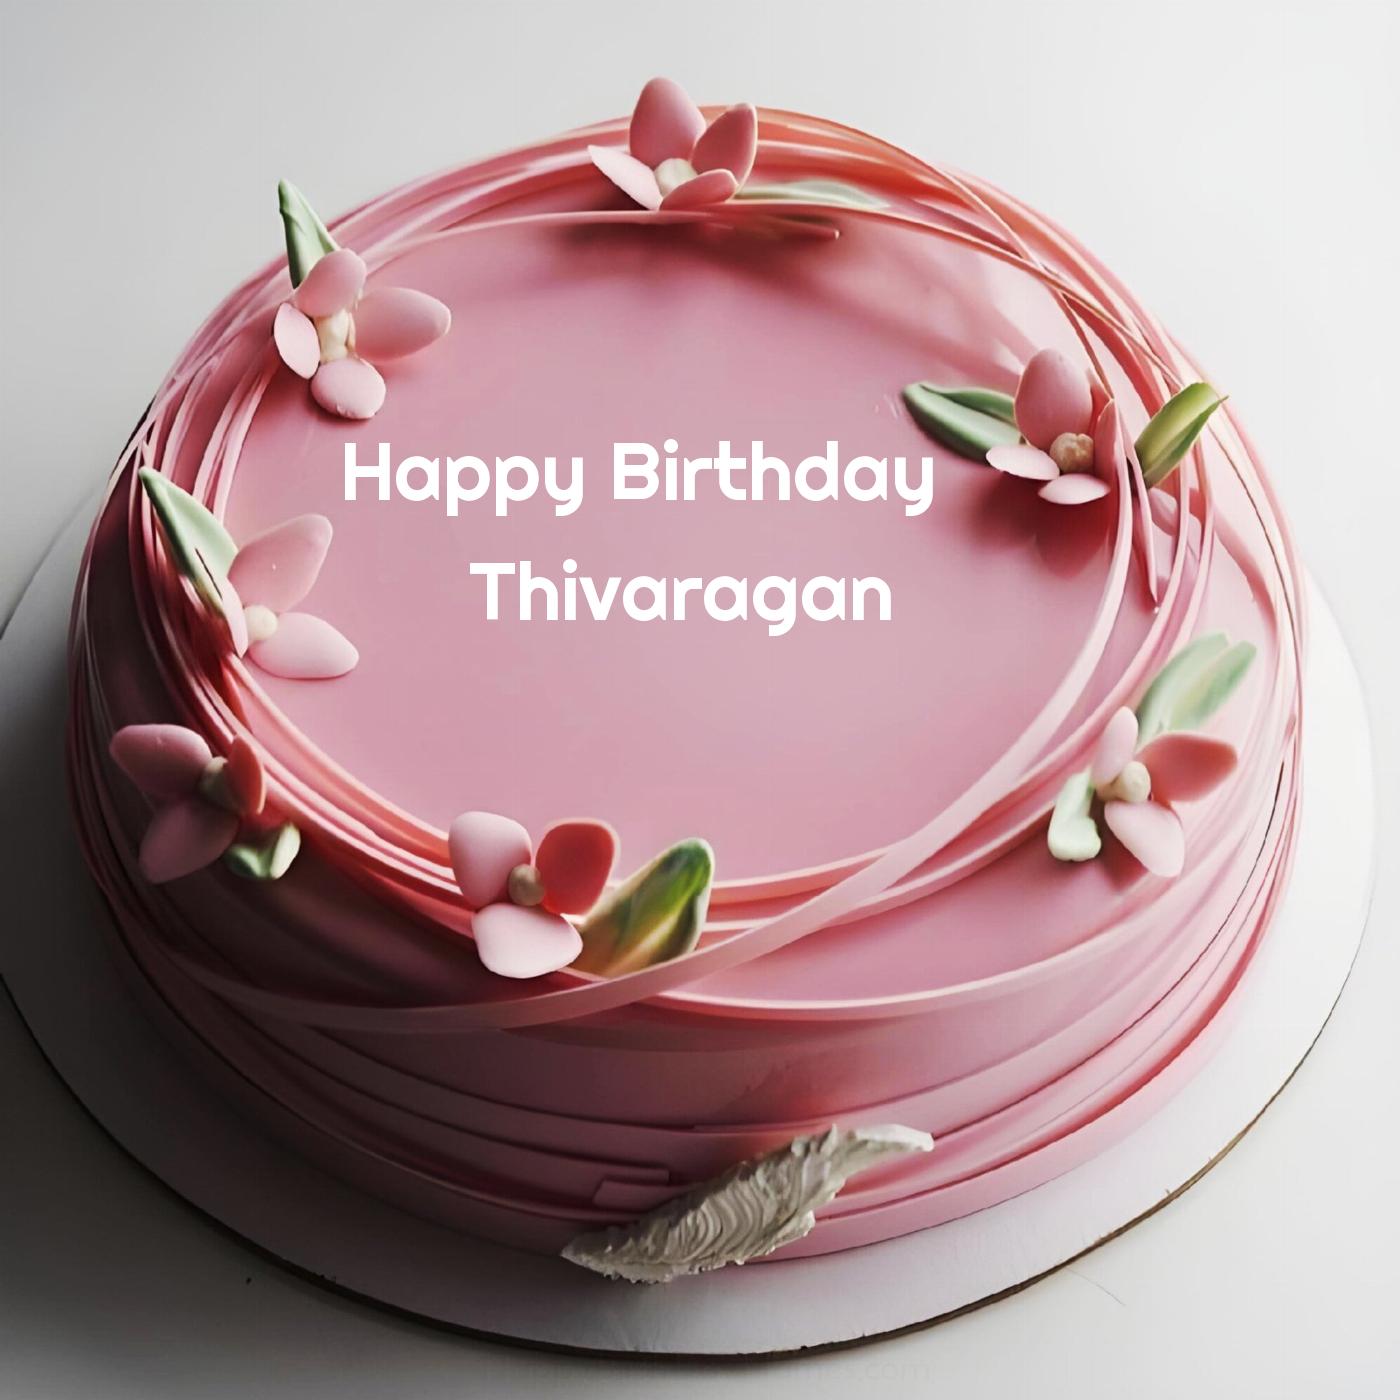 Happy Birthday Thivaragan Pink Flowers Cake